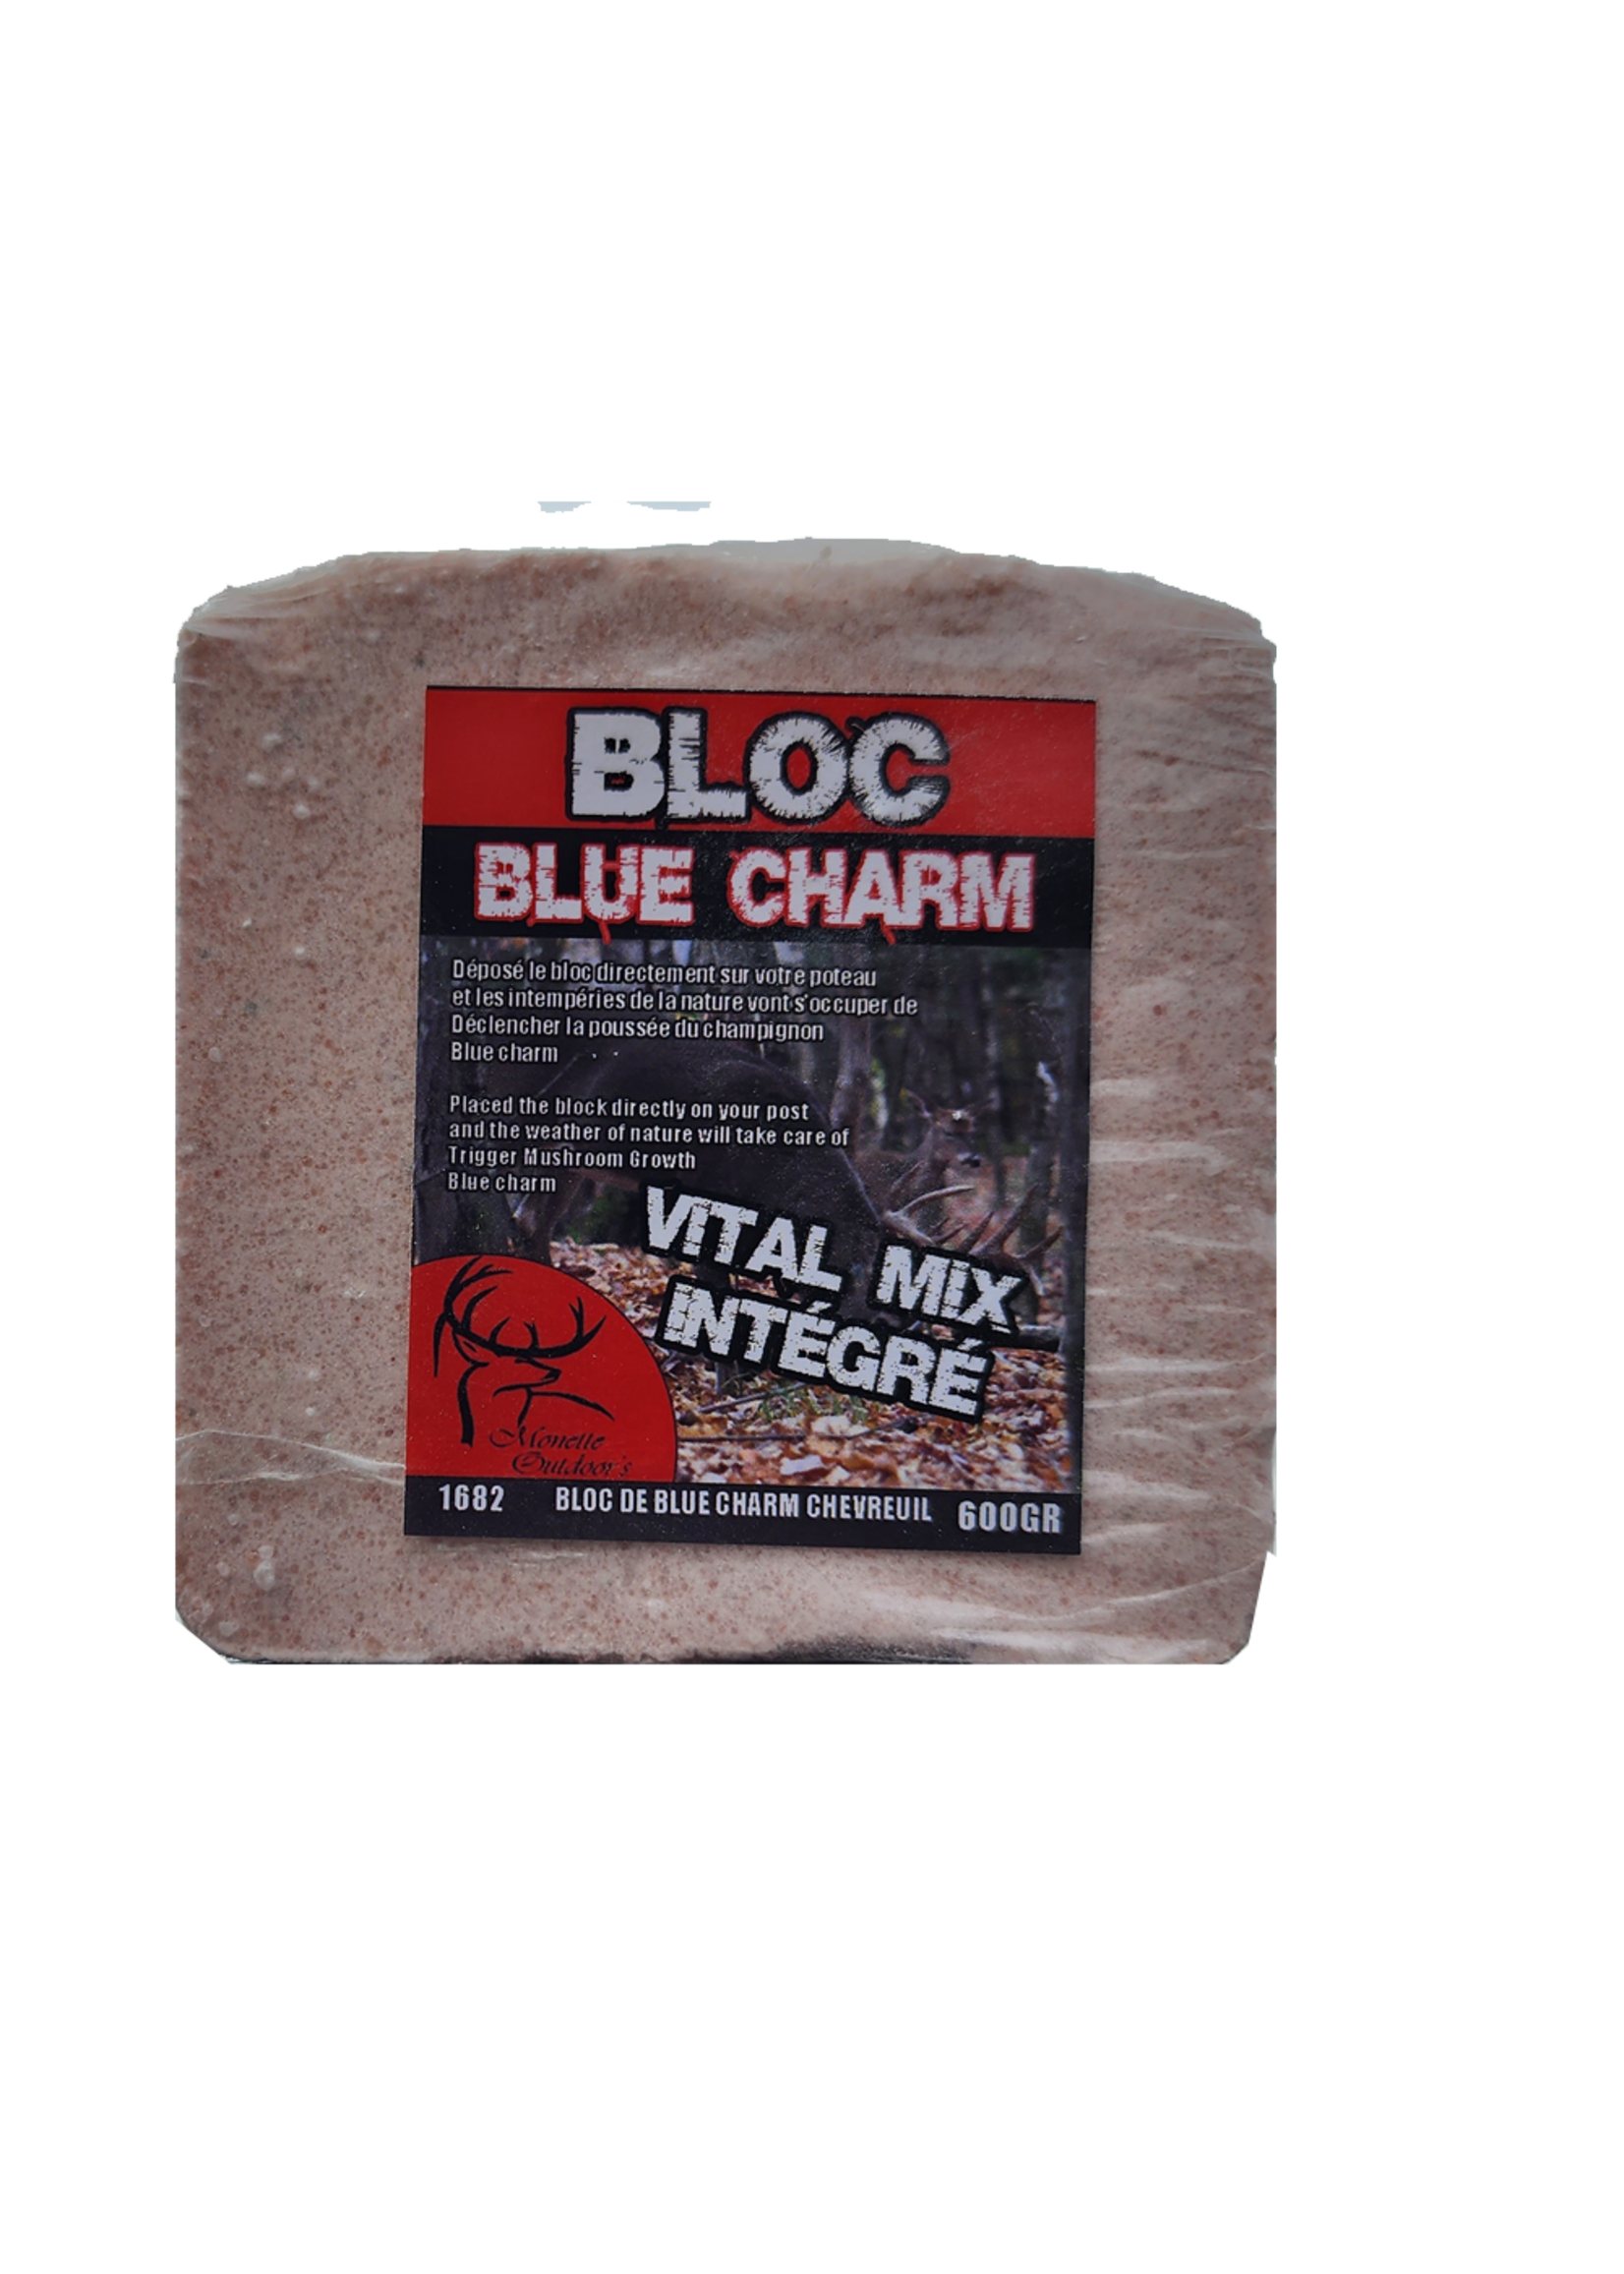 Ferme Monette blue charm block with vital mix for deer